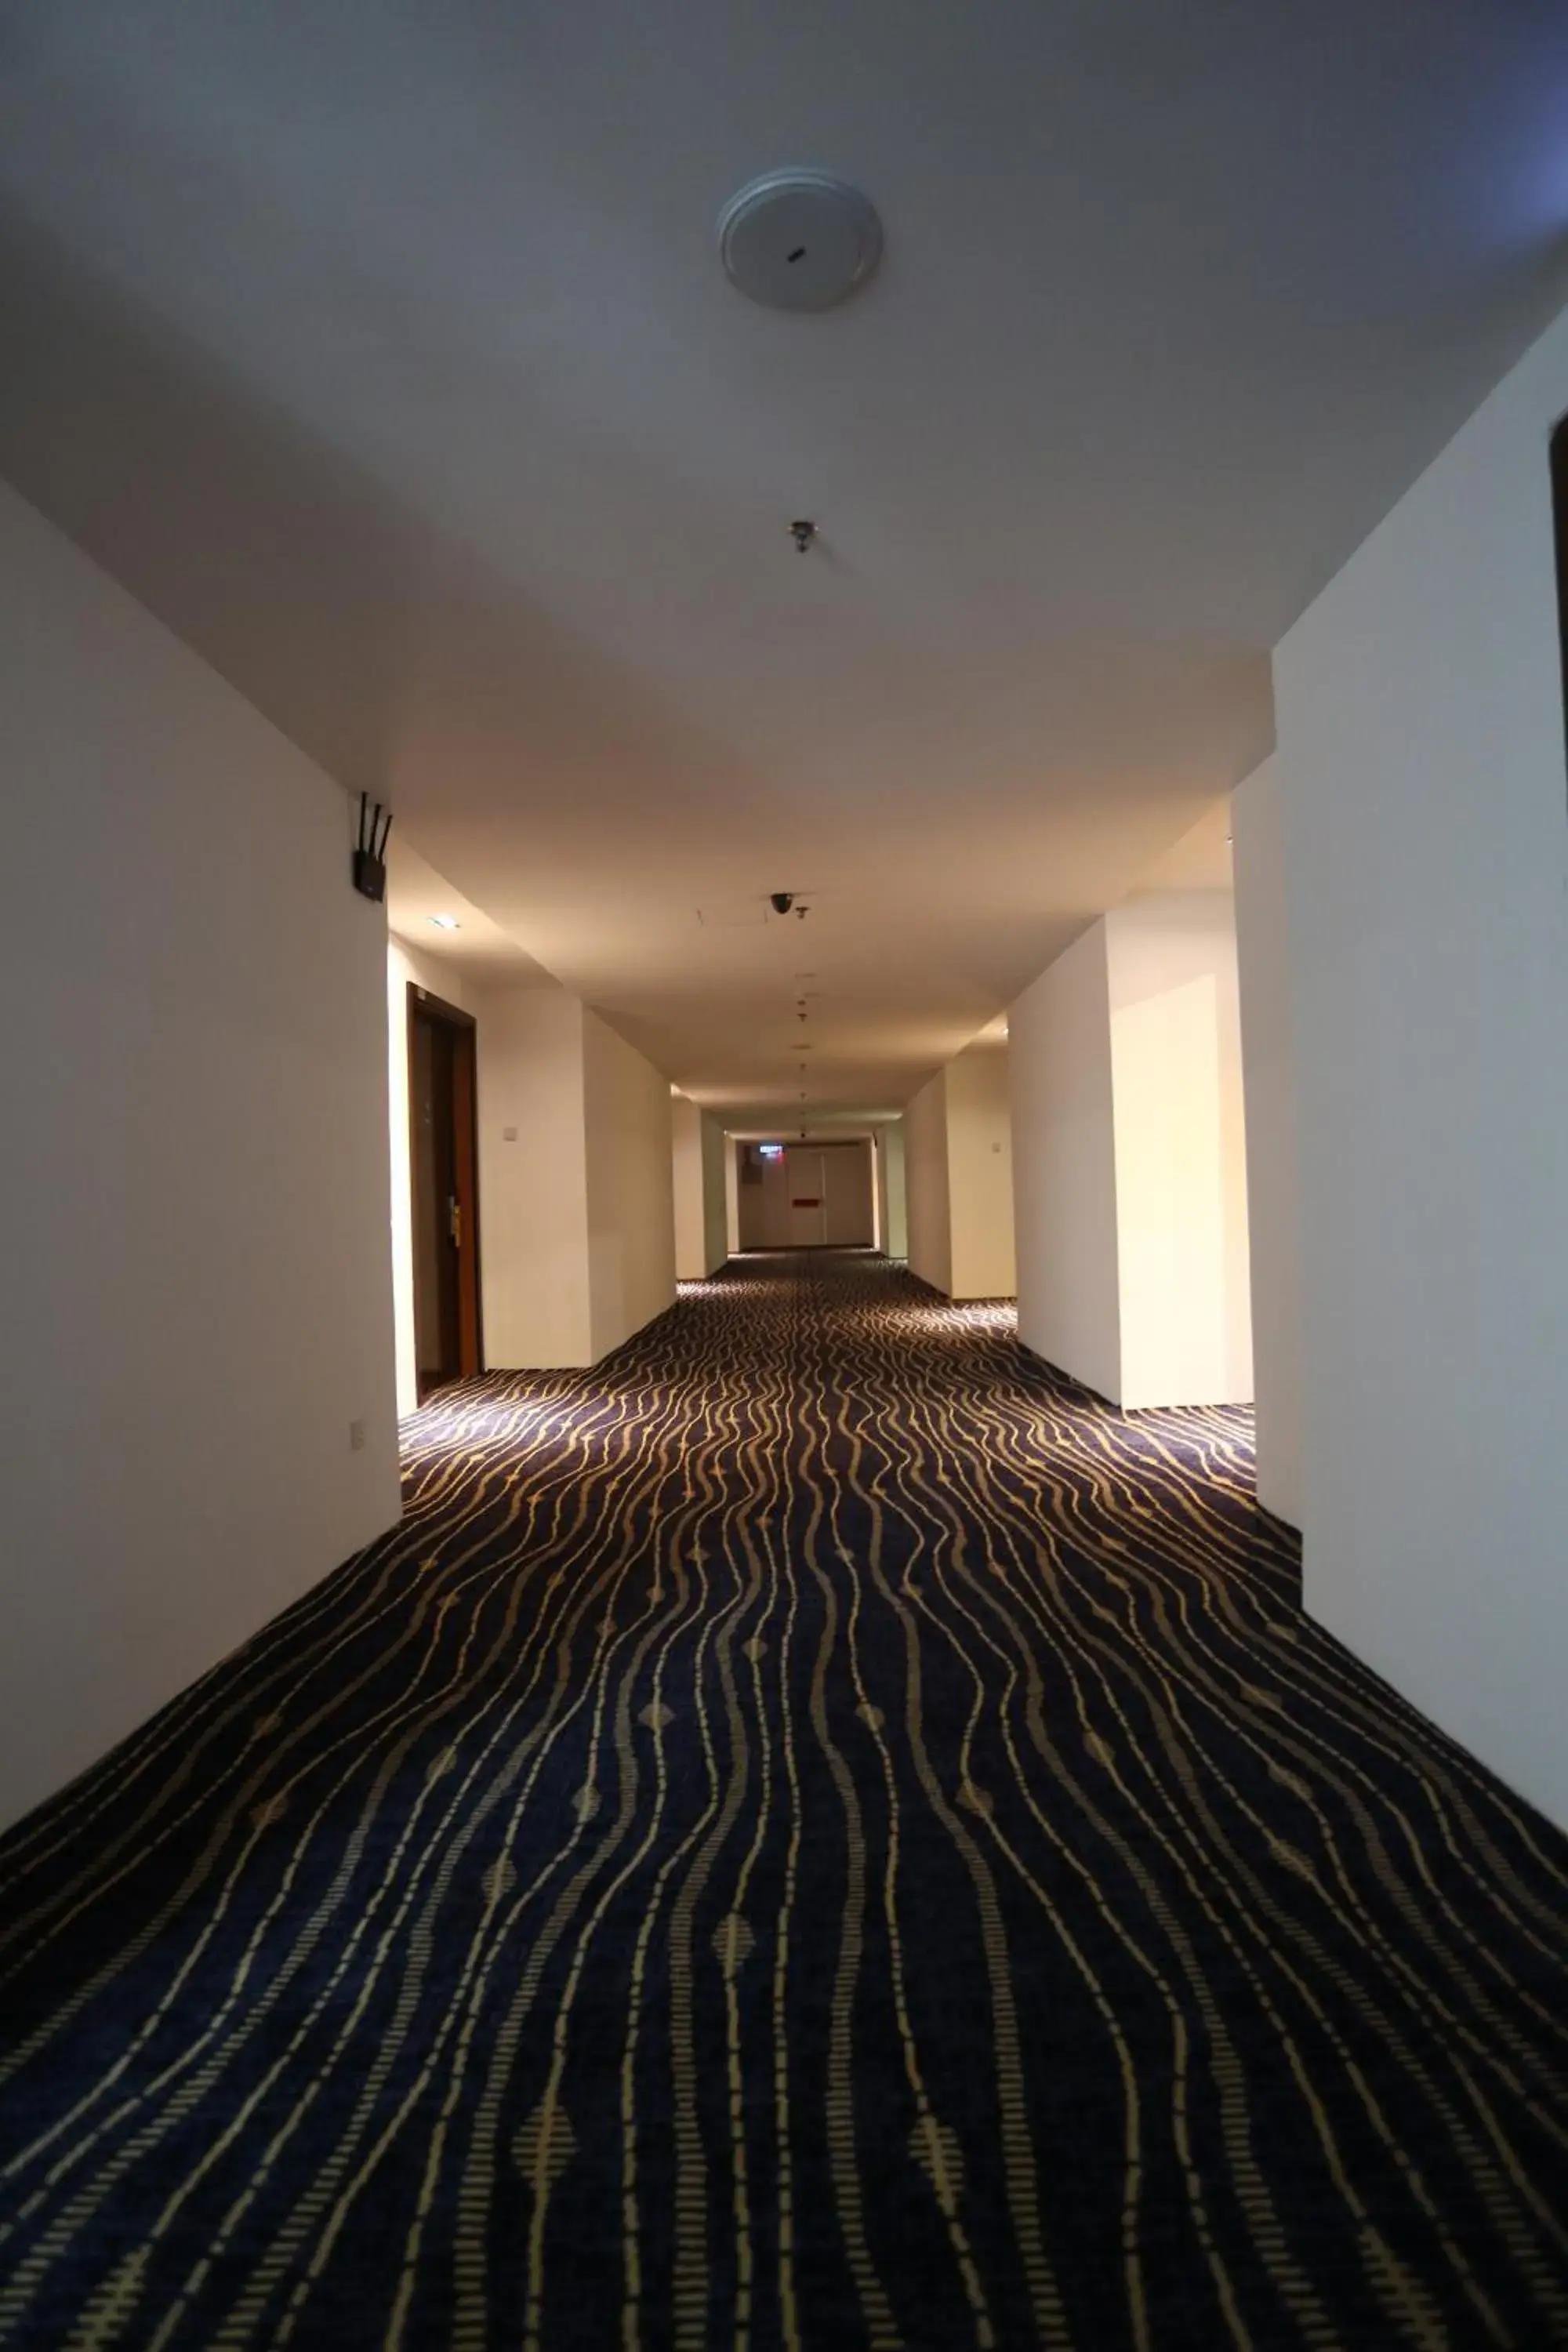 Area and facilities in Nexus Regency Suites & Hotel